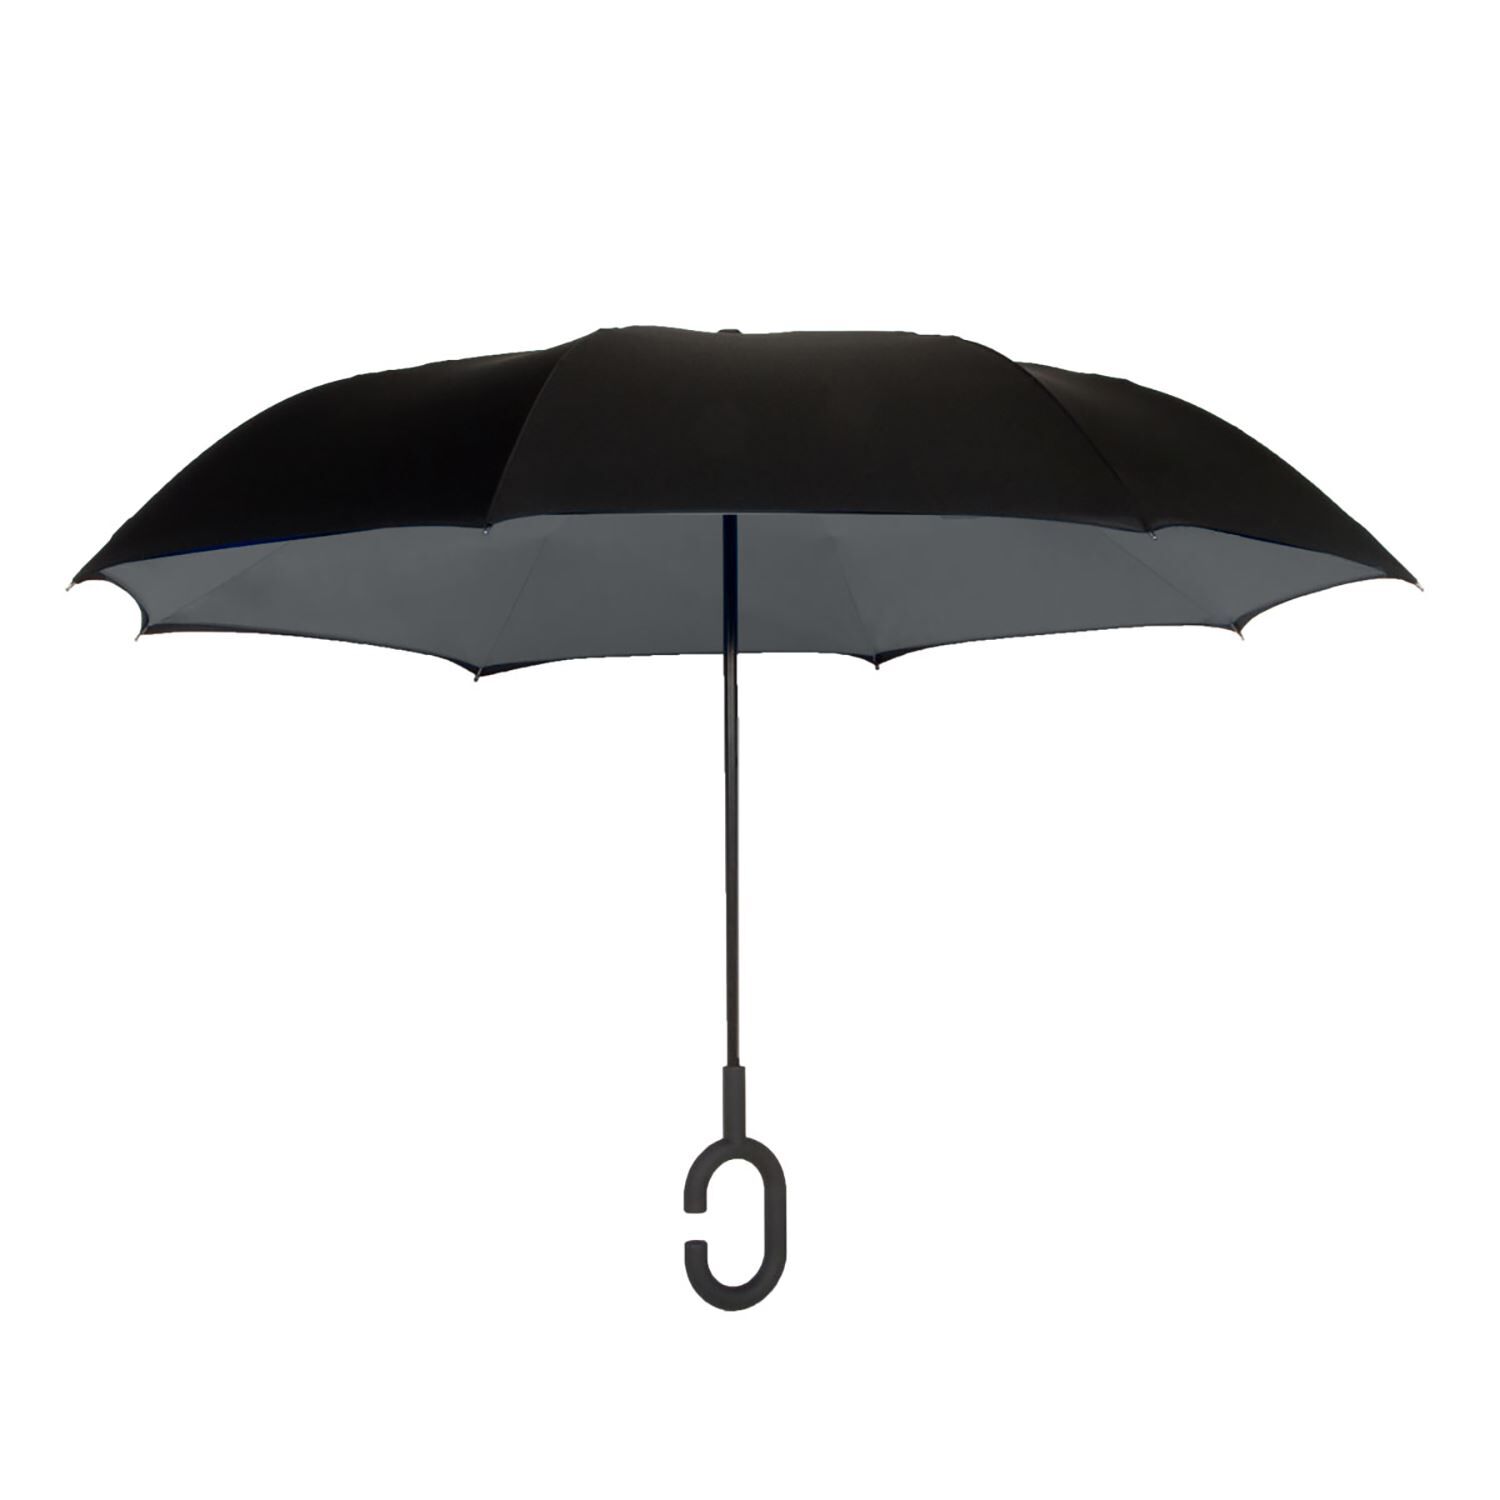 Custom Branded ShedRain Umbrellas - Black/Charcoal